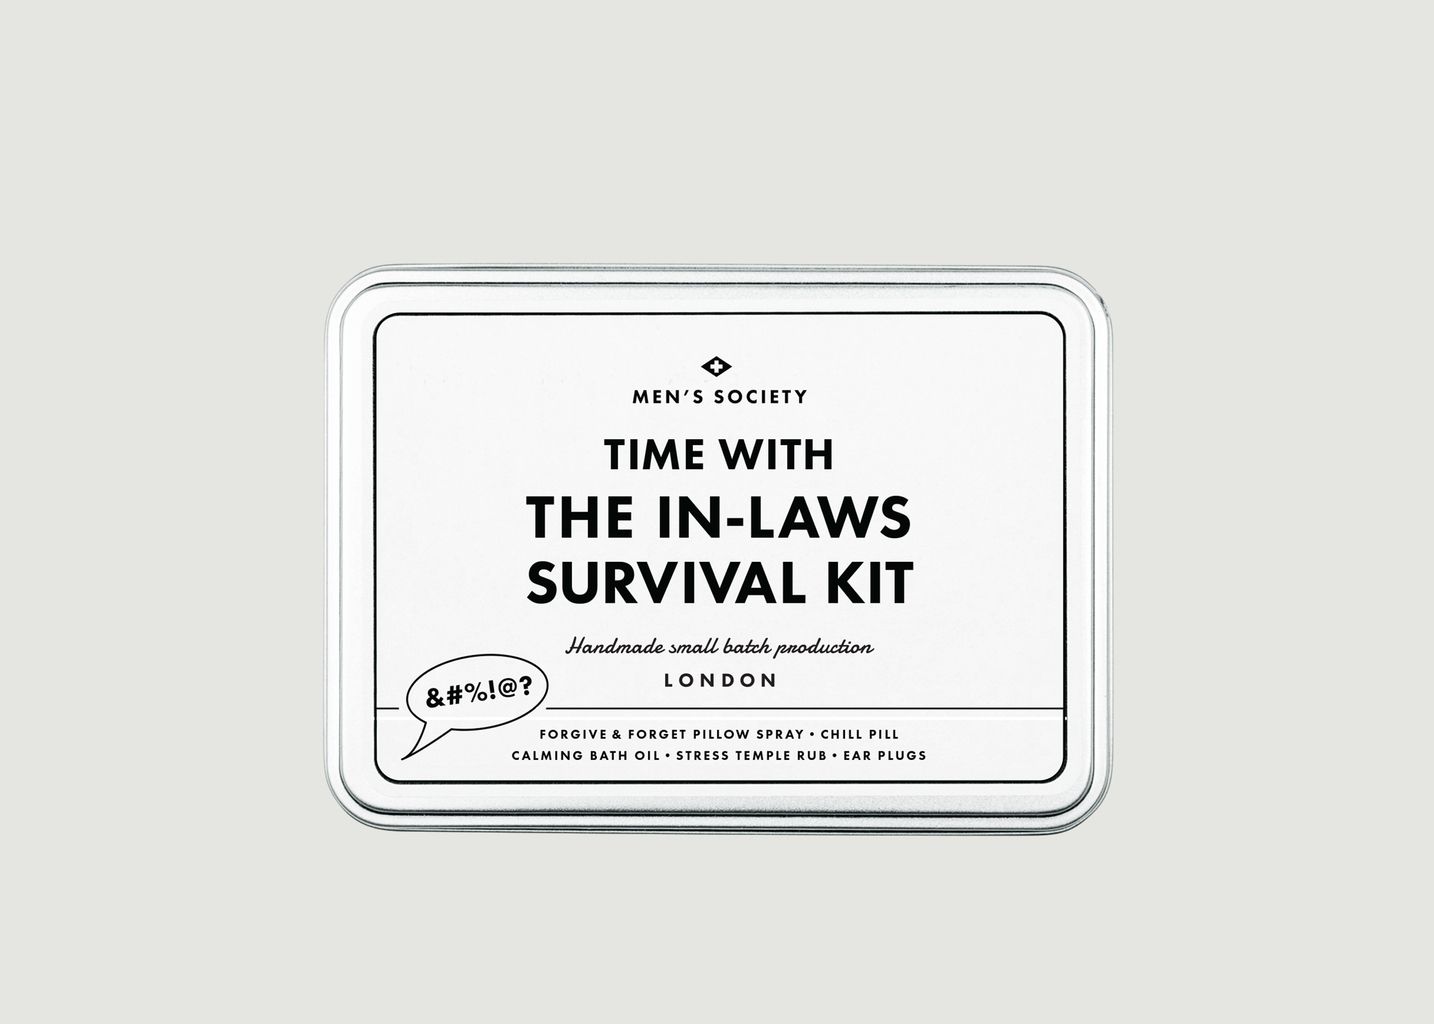 Zeit mit The In-laws Survival Kit - Men's Society